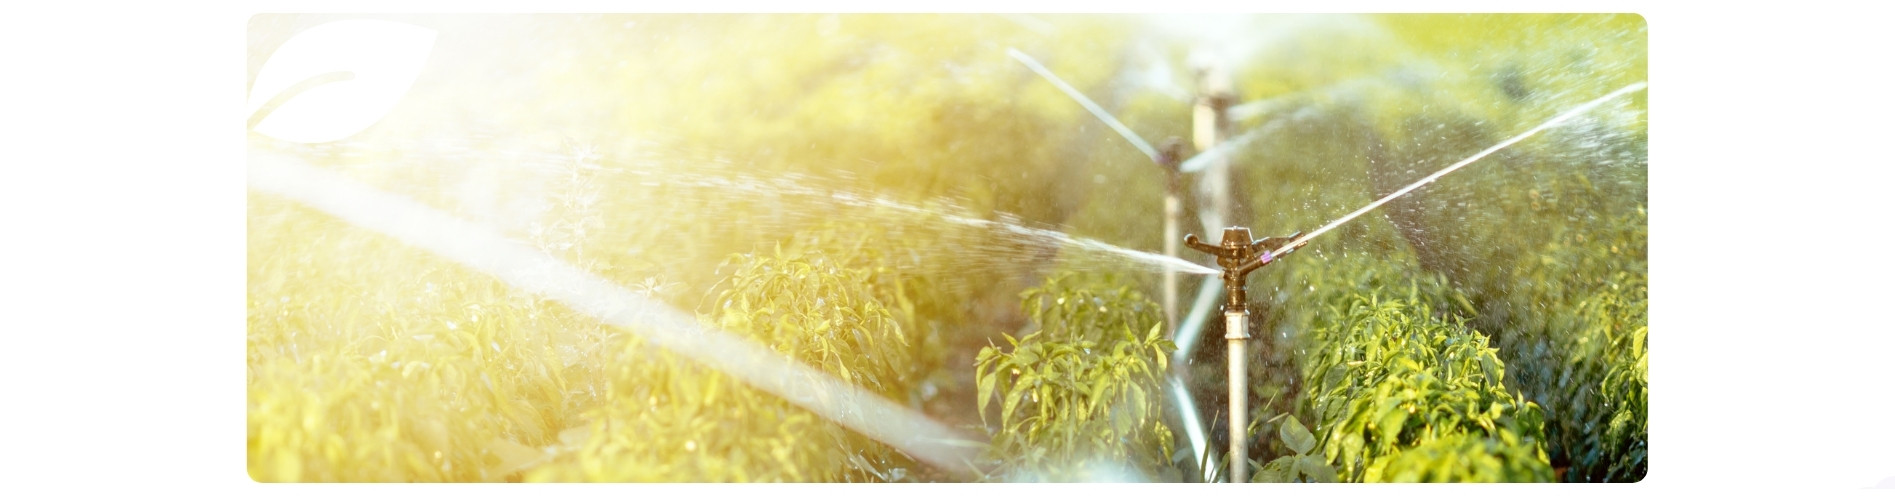 Irrigation et pulvérisation